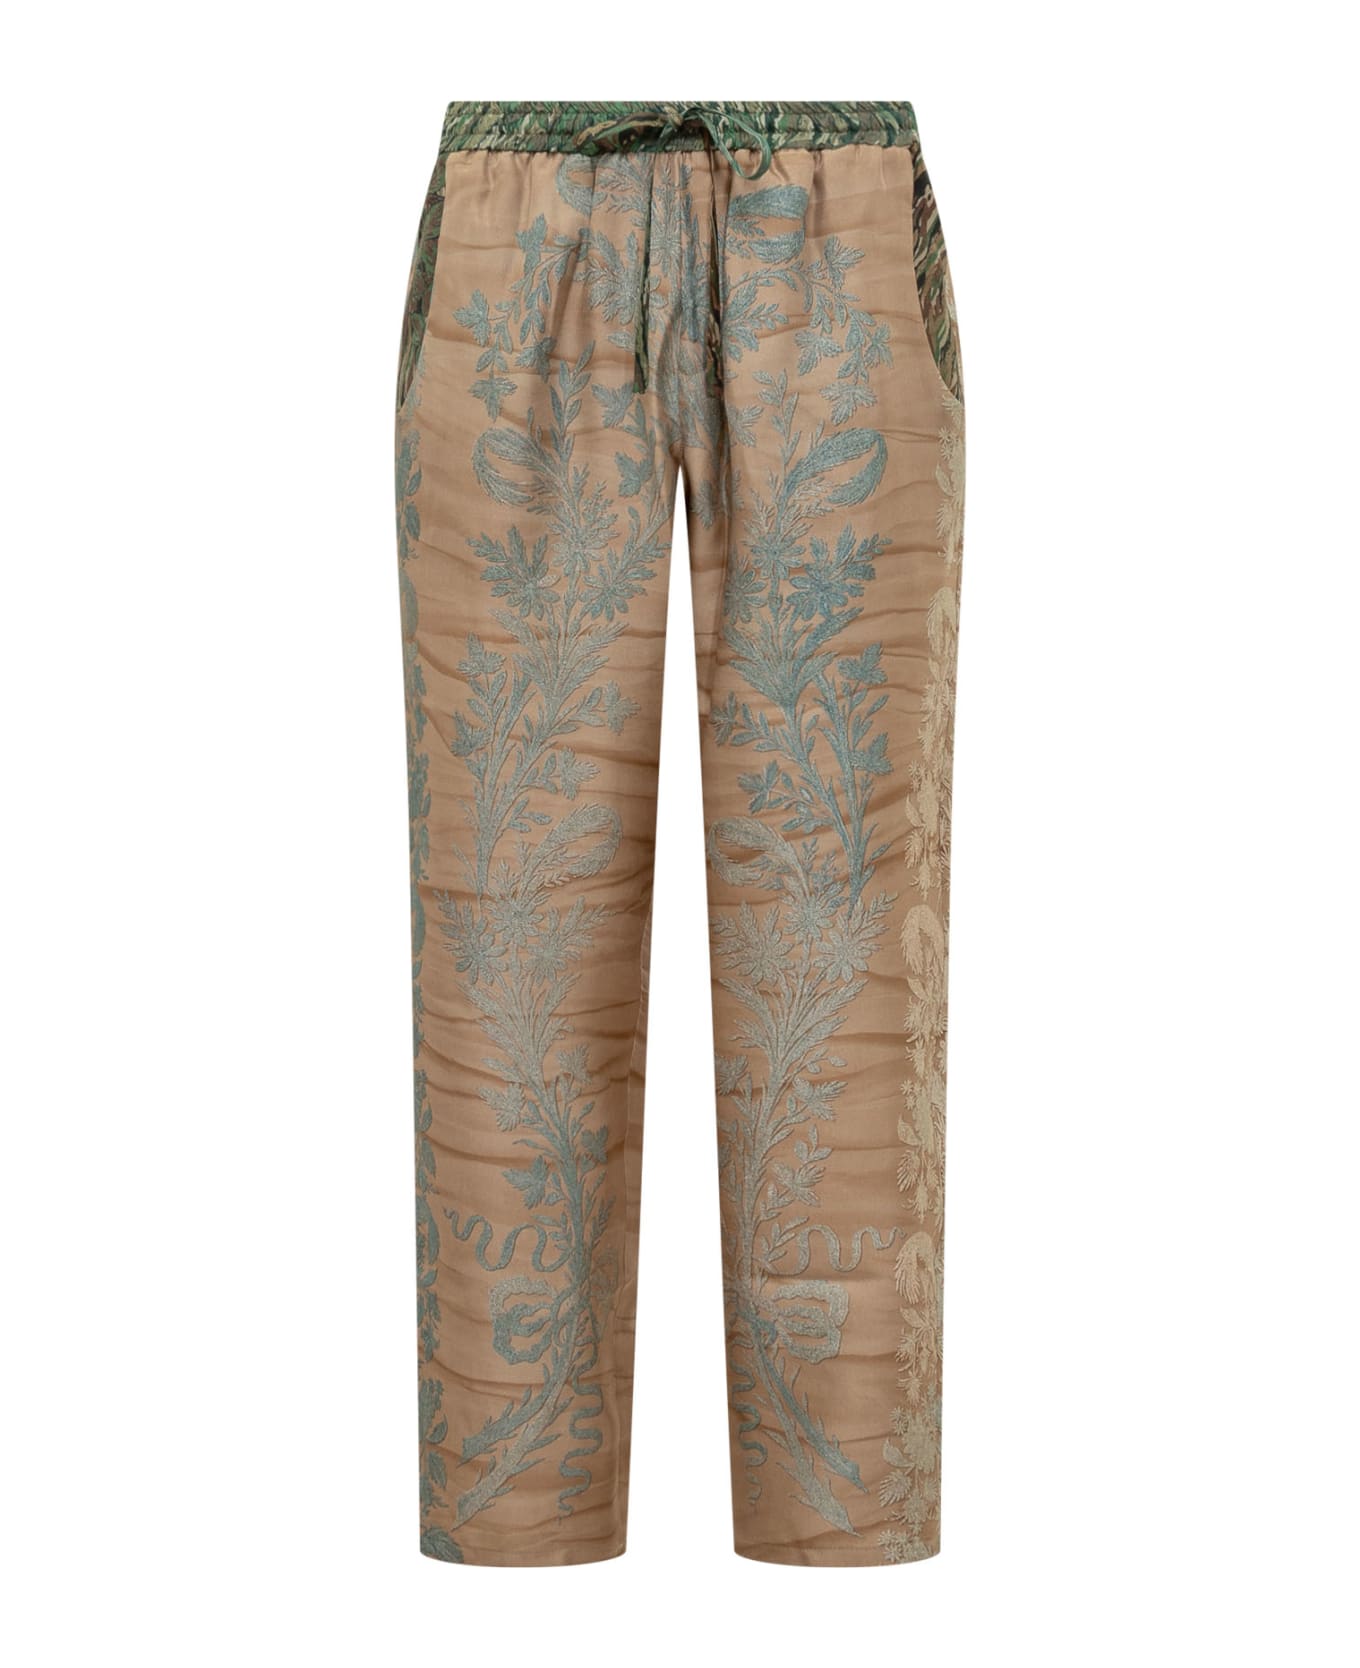 Pierre-Louis Mascia Silk Pants With Floral Print - CIPRIA AZZURRO